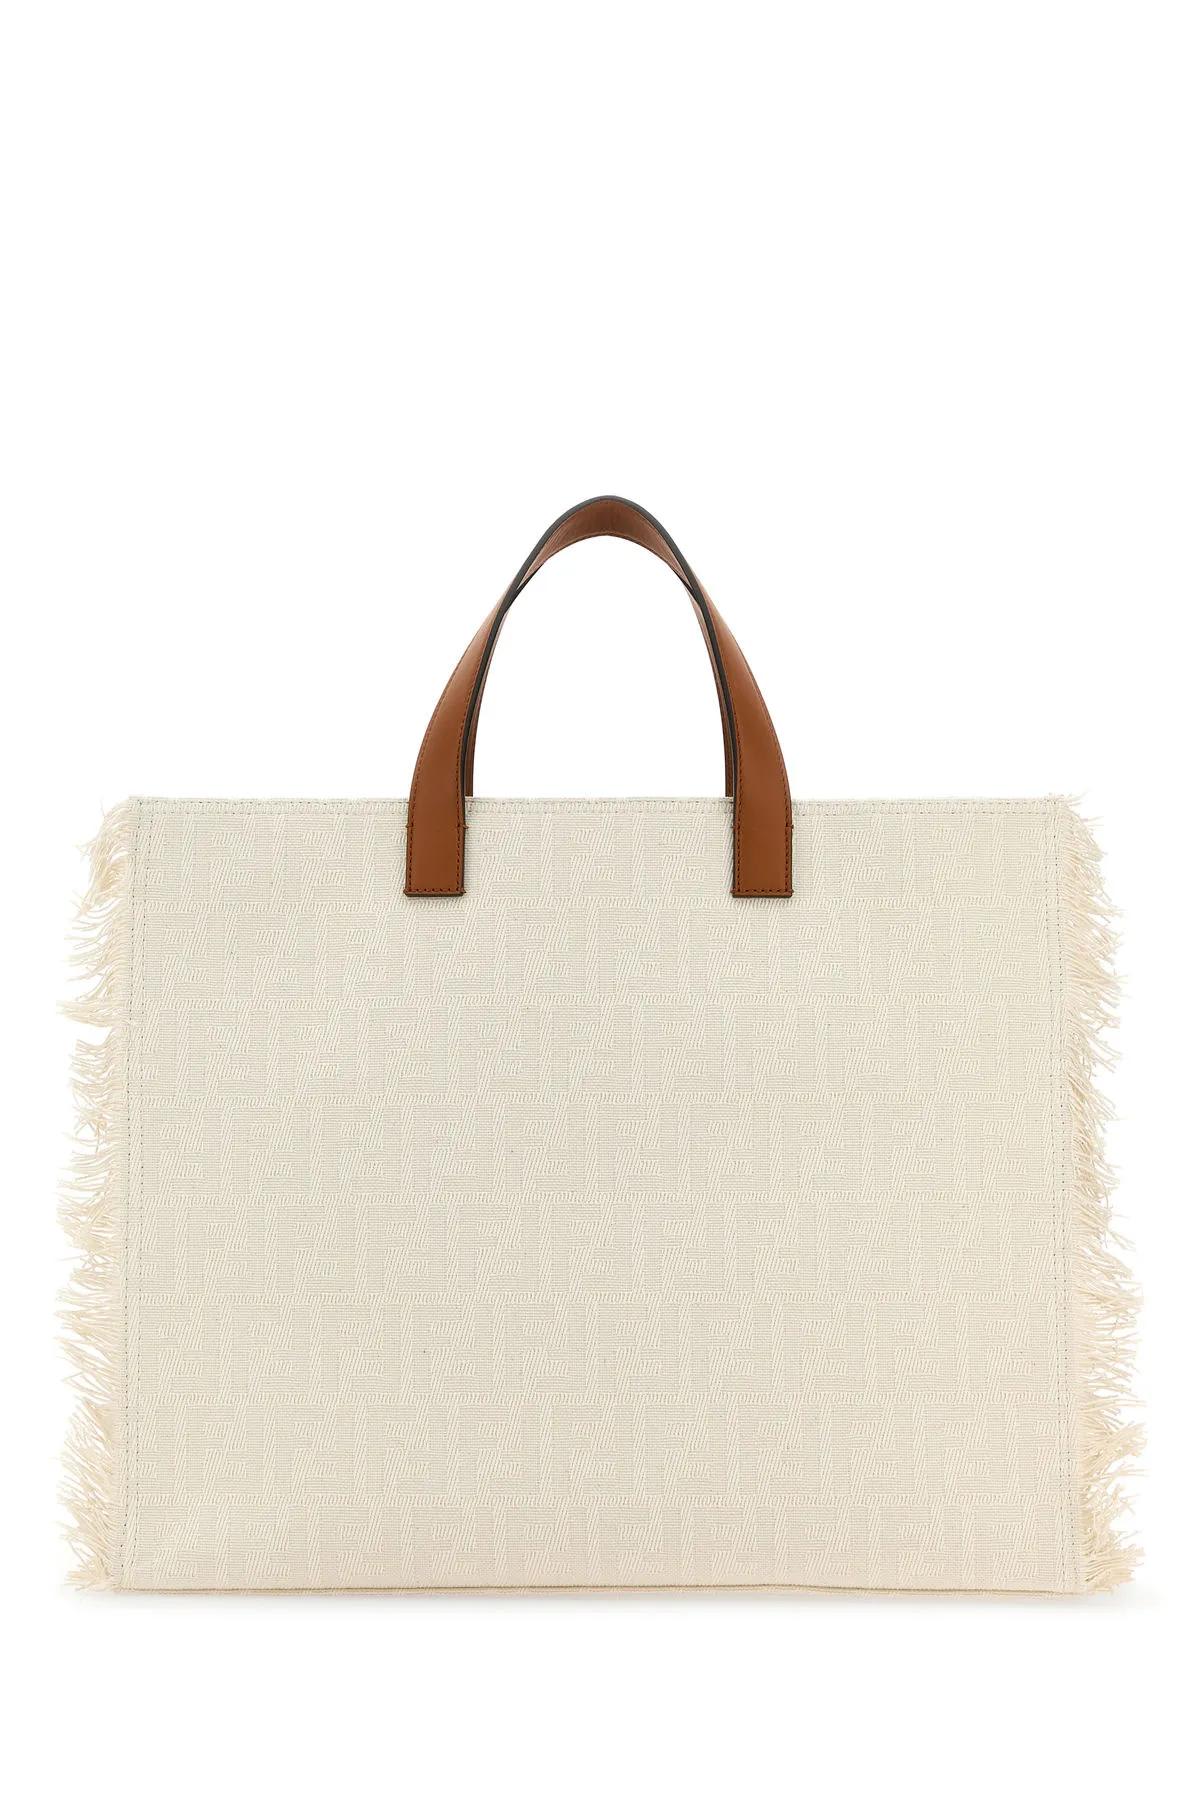 Shop Fendi Embroidered Jacquard Shopping Bag